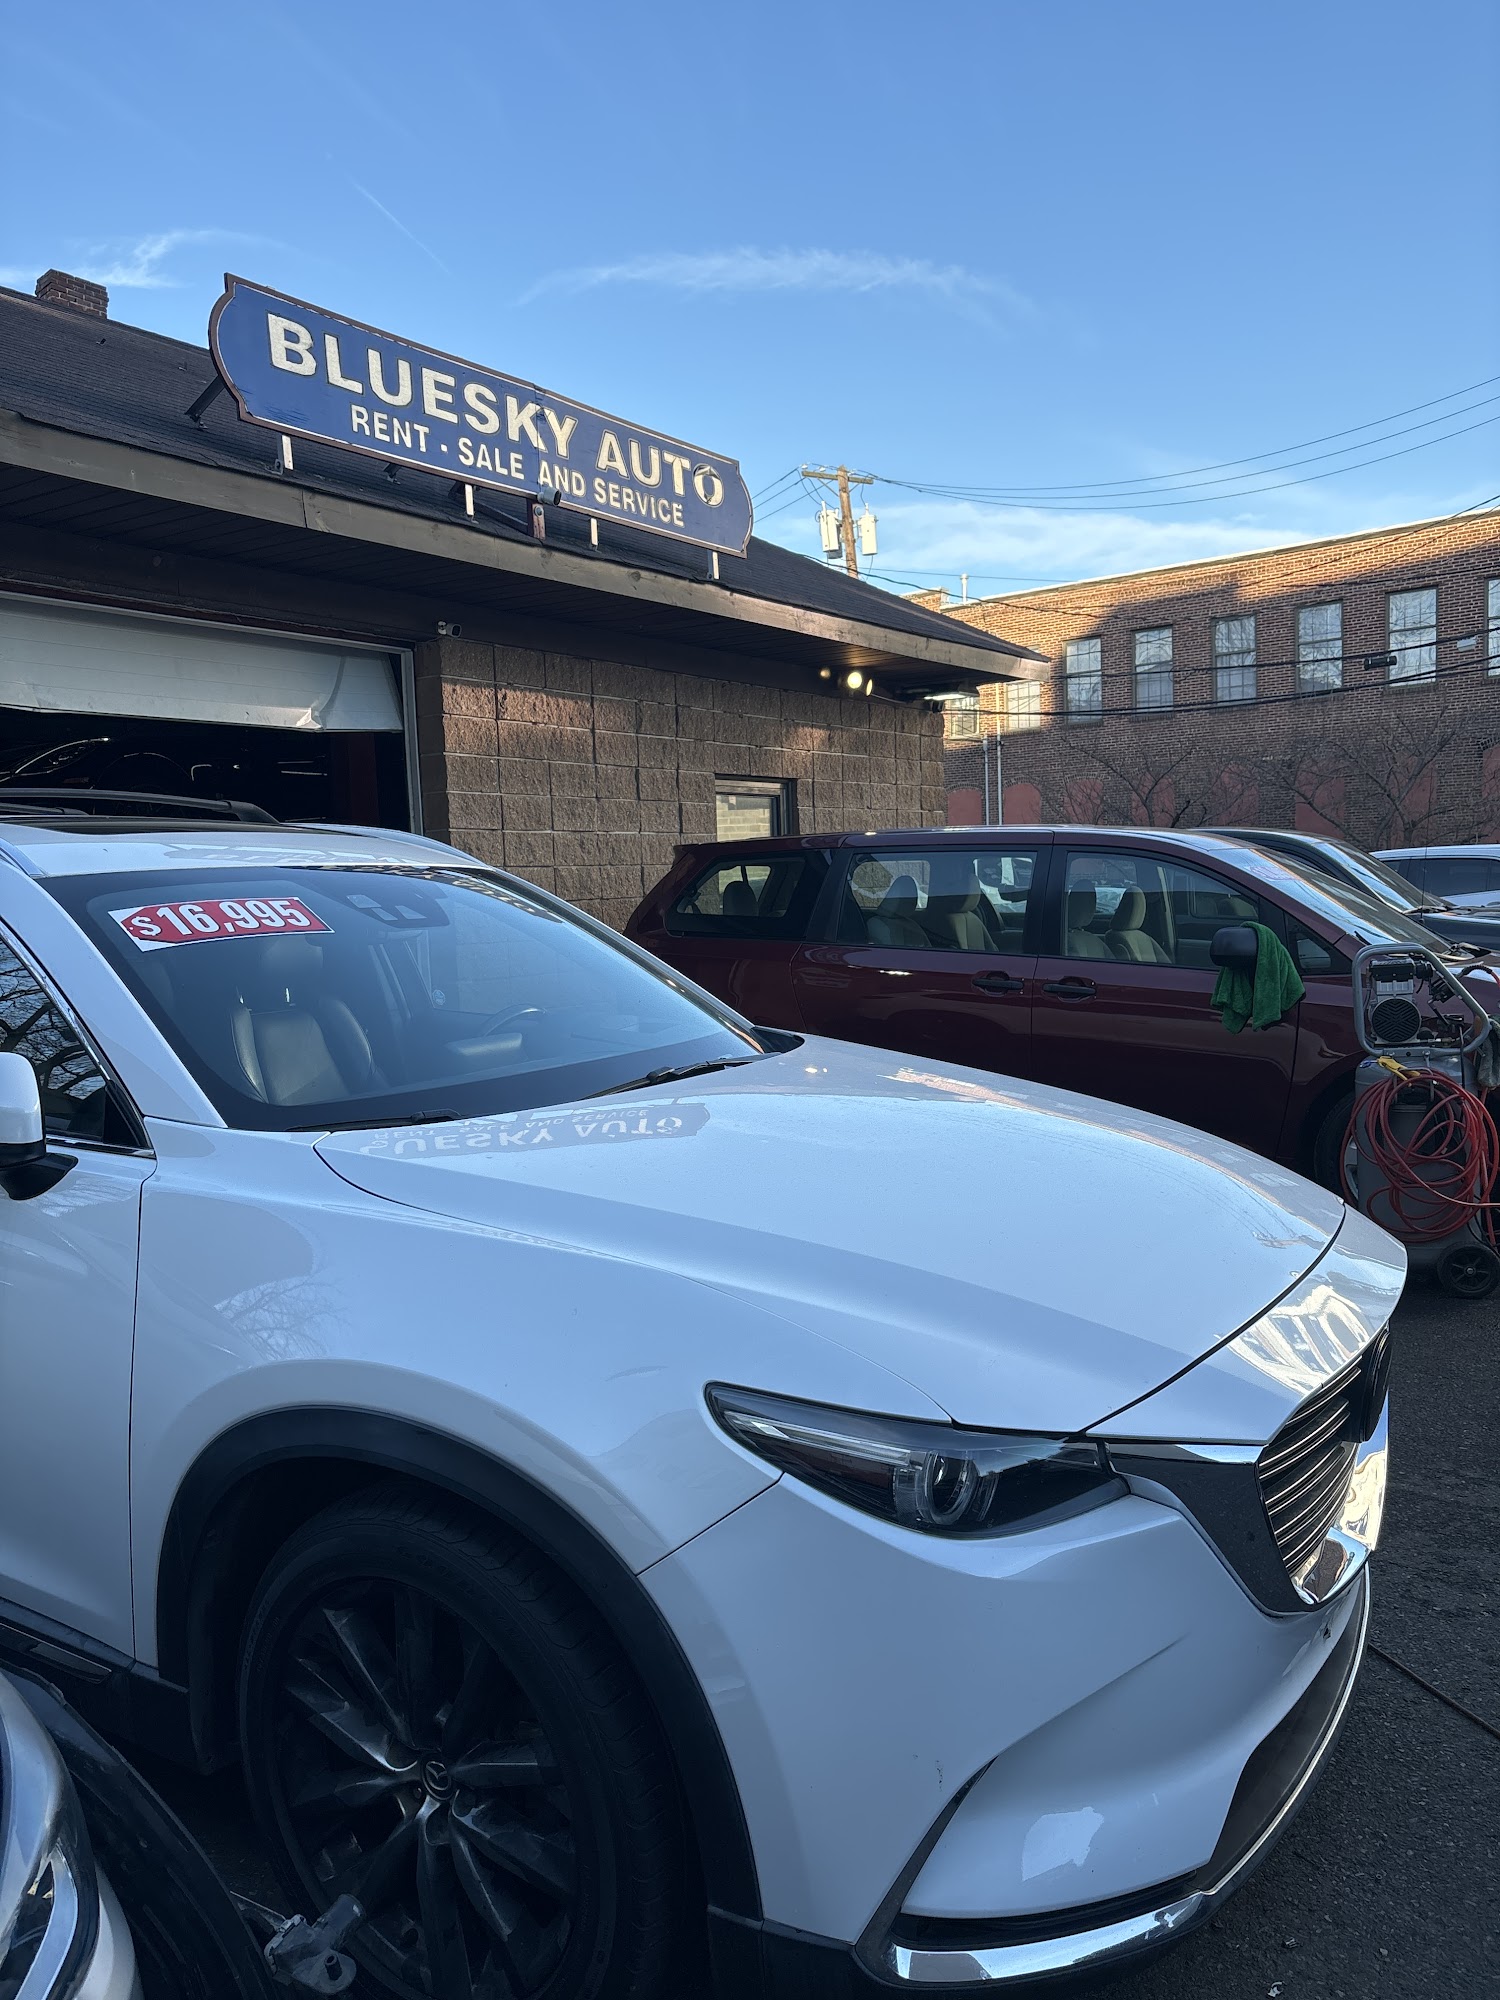 Blue Sky Auto - Car Dealership - New Jersey